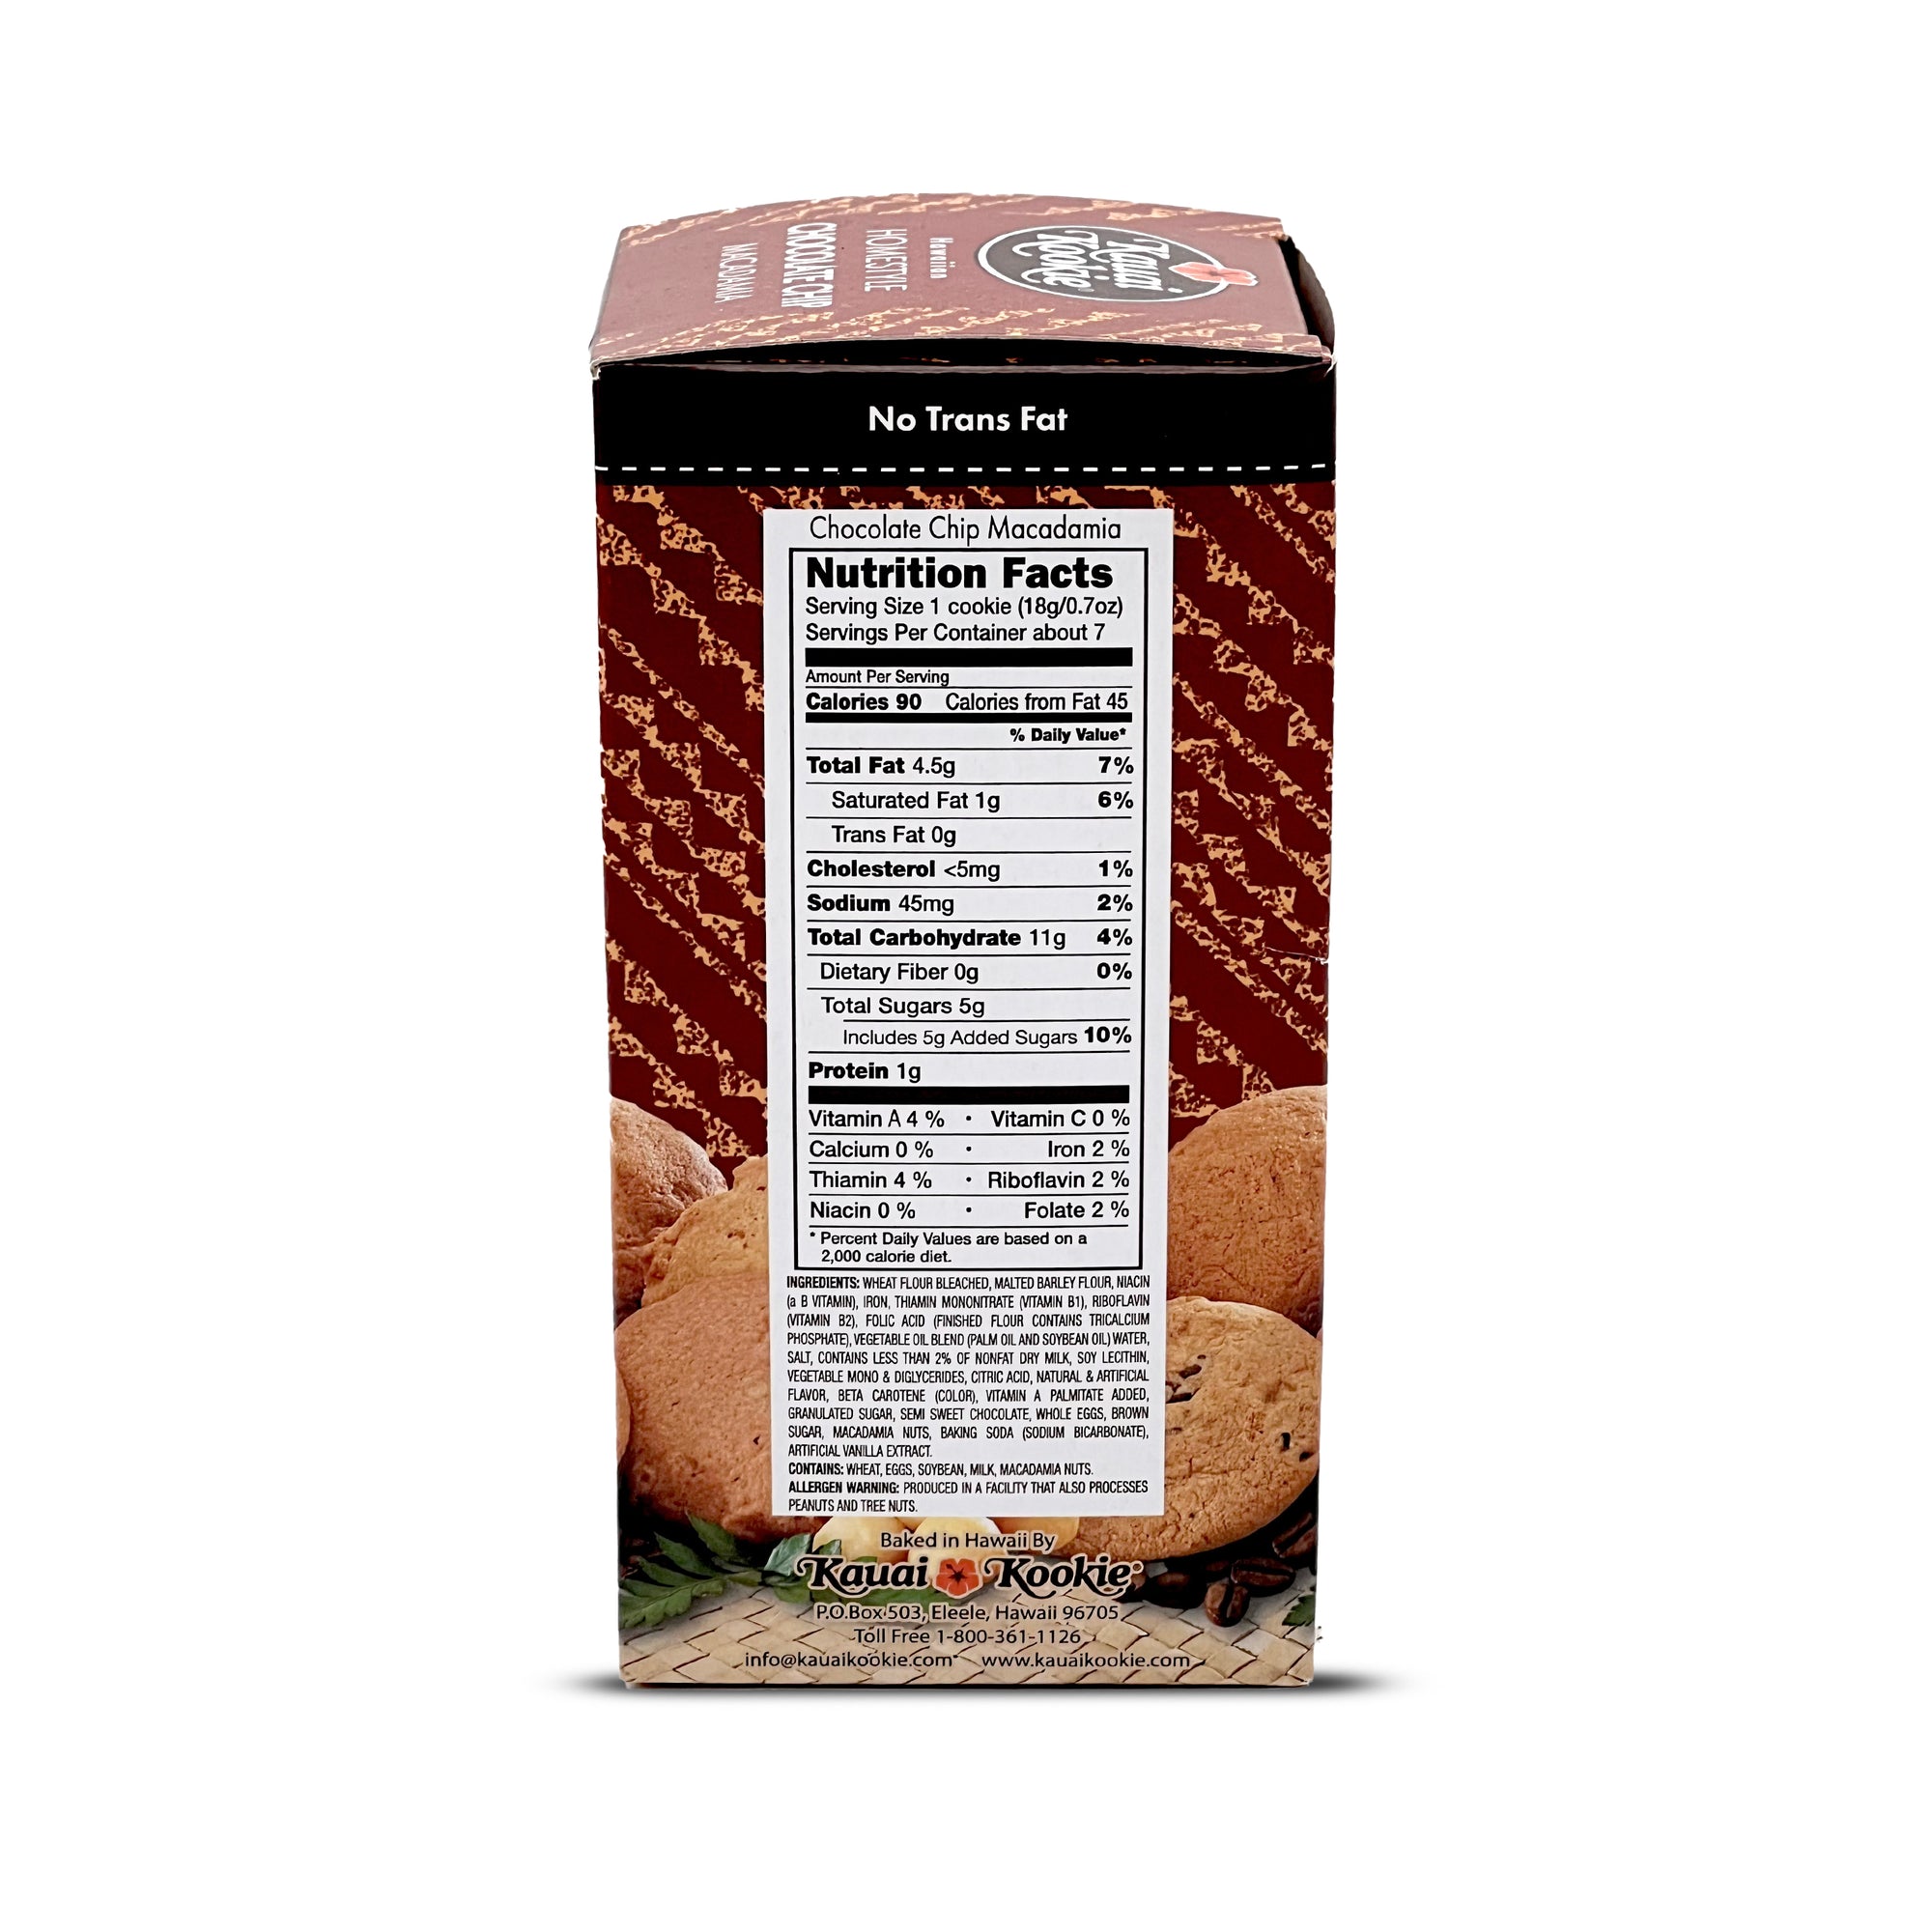 Pop-Up Mākeke - Kauai Kookie - Homestyle Chocolate Chip Macadamia Nut Cookies - Nutritional Facts